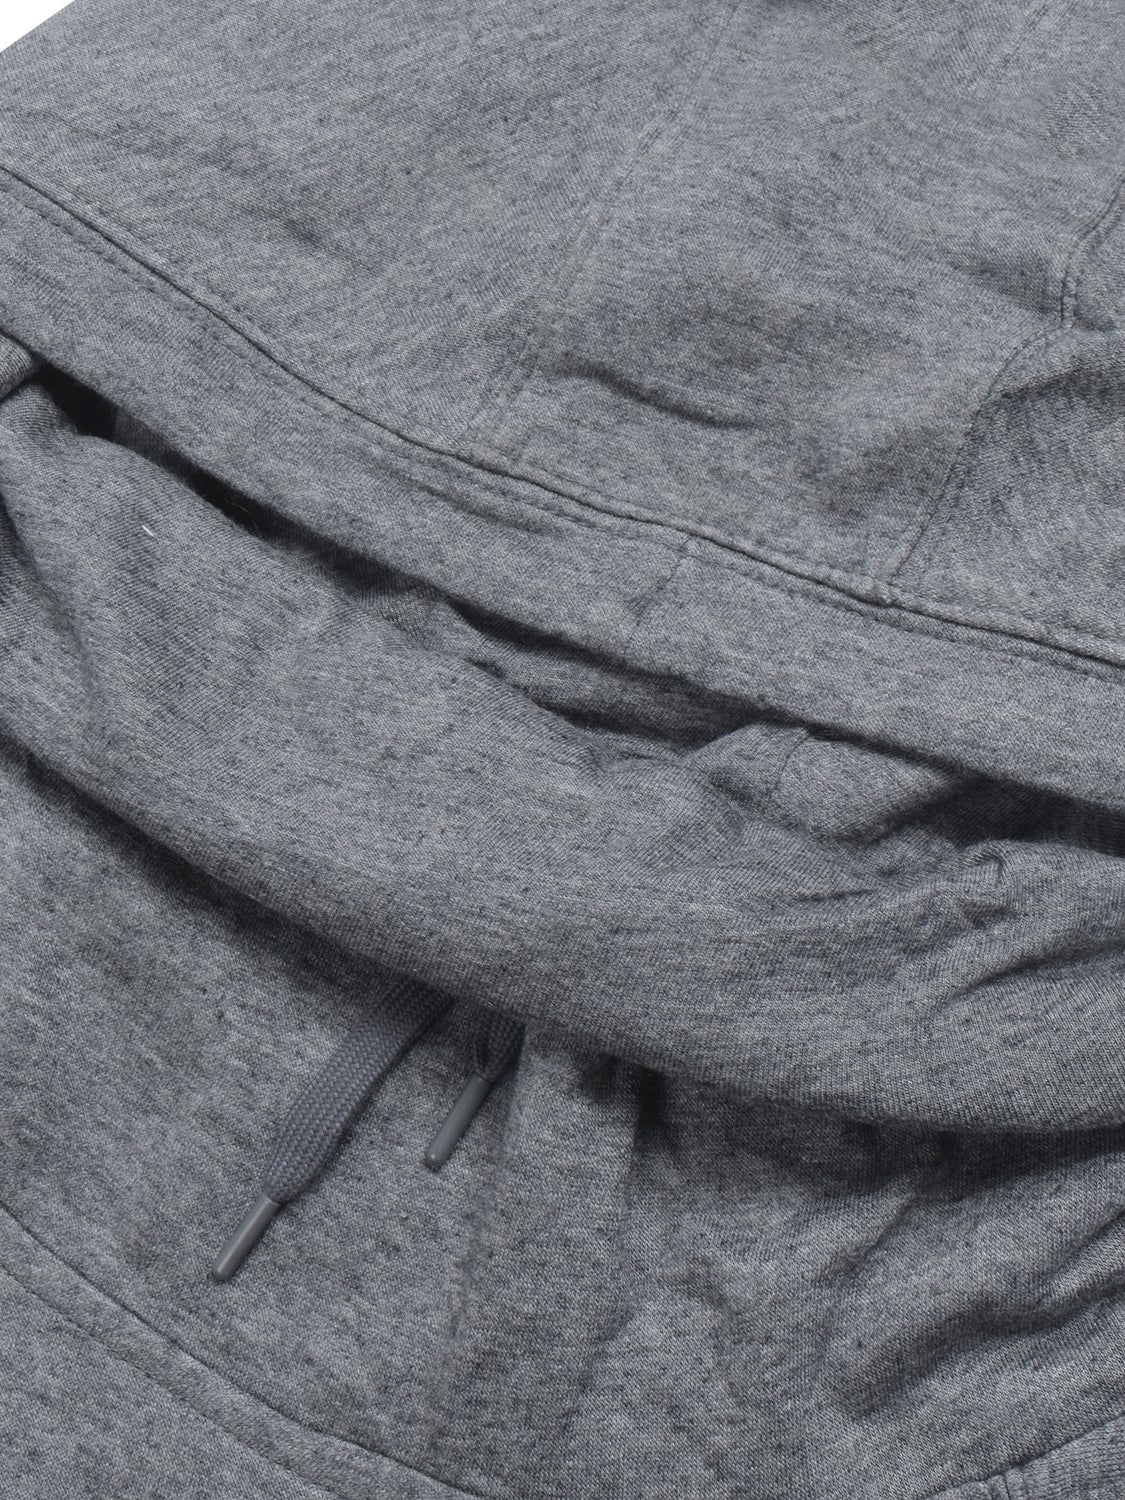 P&B Fleece Pullover Hoodie For Men-Charcoal Melange With Black Panel-SP634